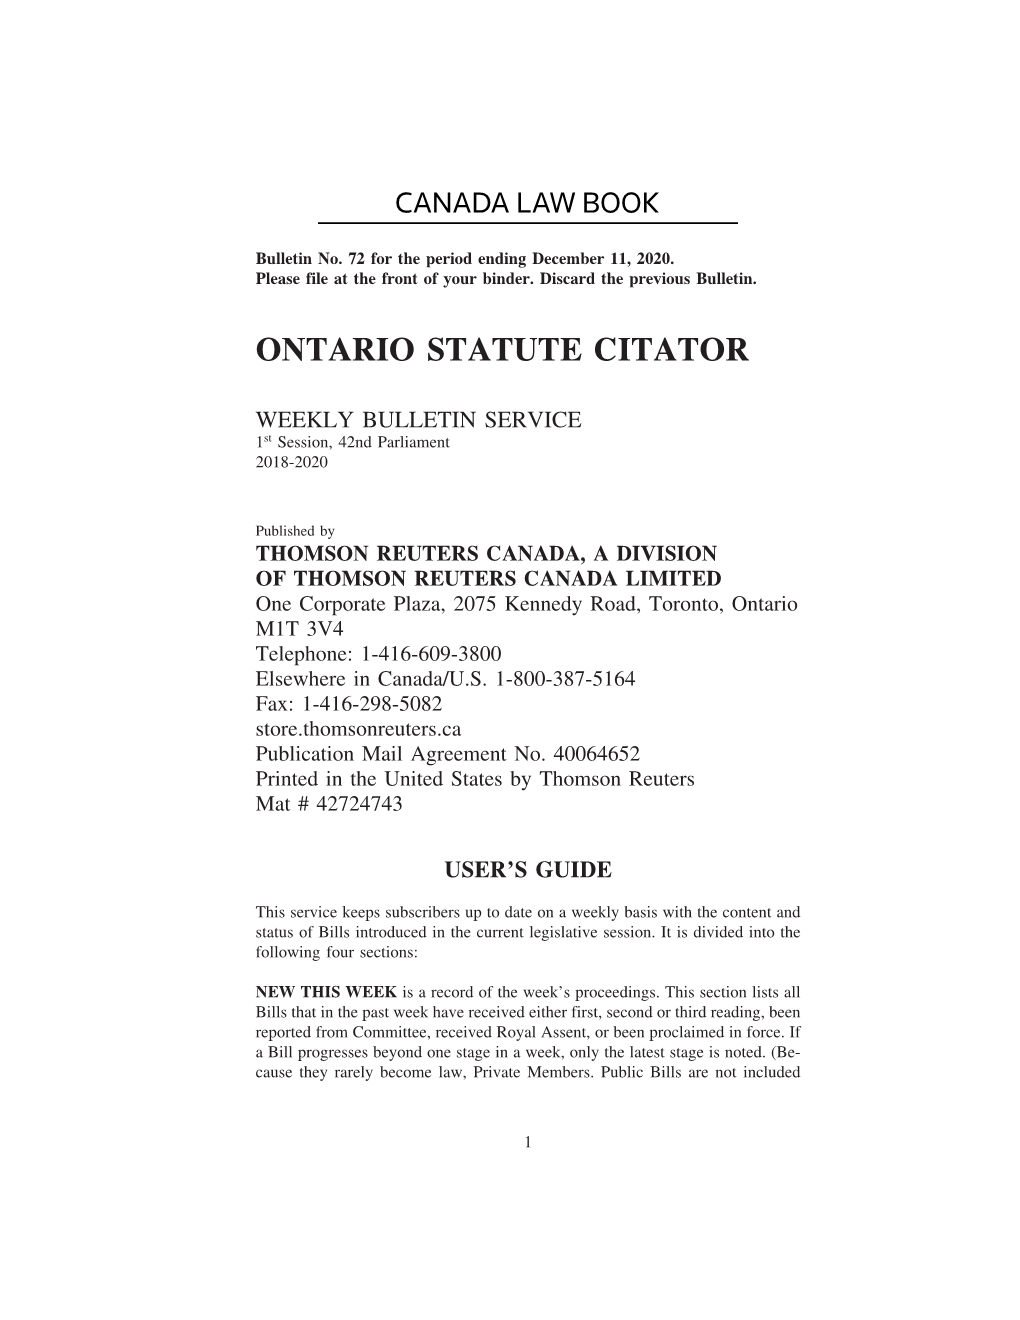 Ontario Statute Citator